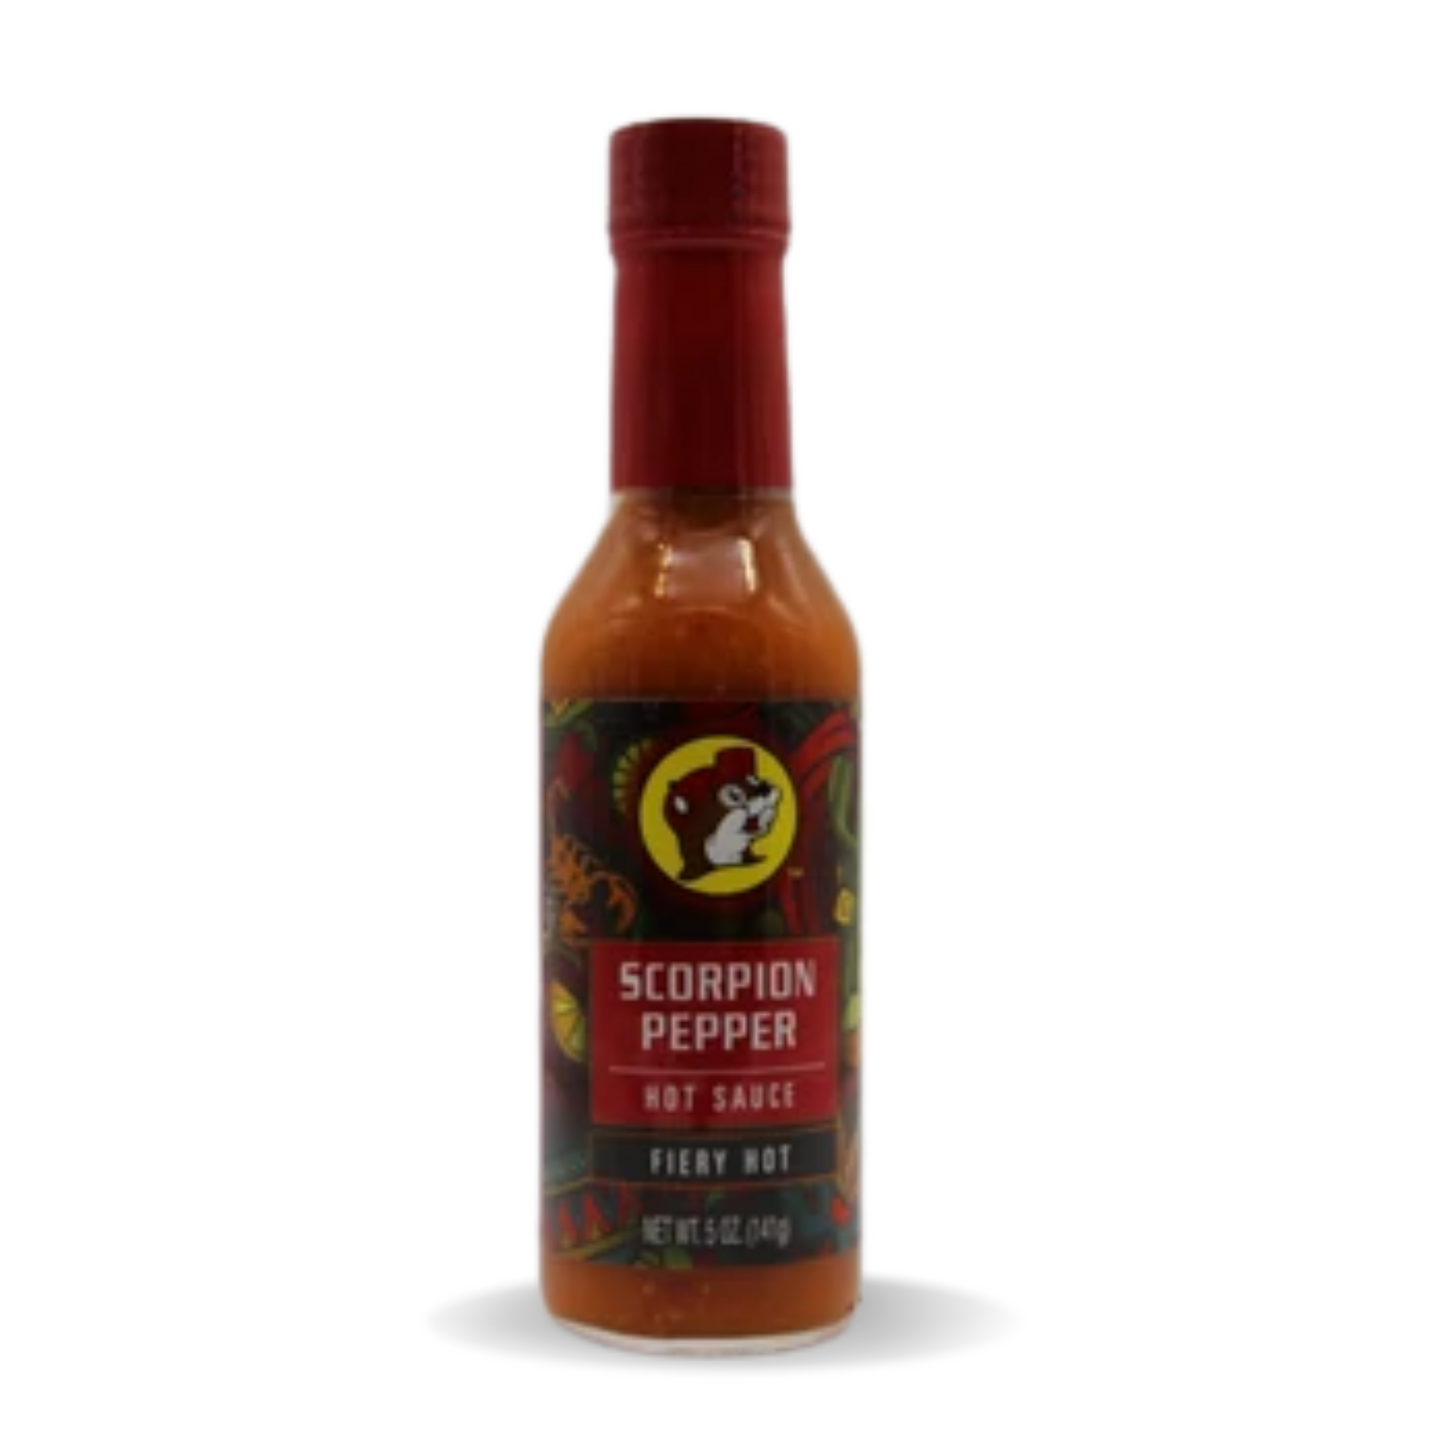 Scorpion Pepper Hot Sauce - Fiery Hot